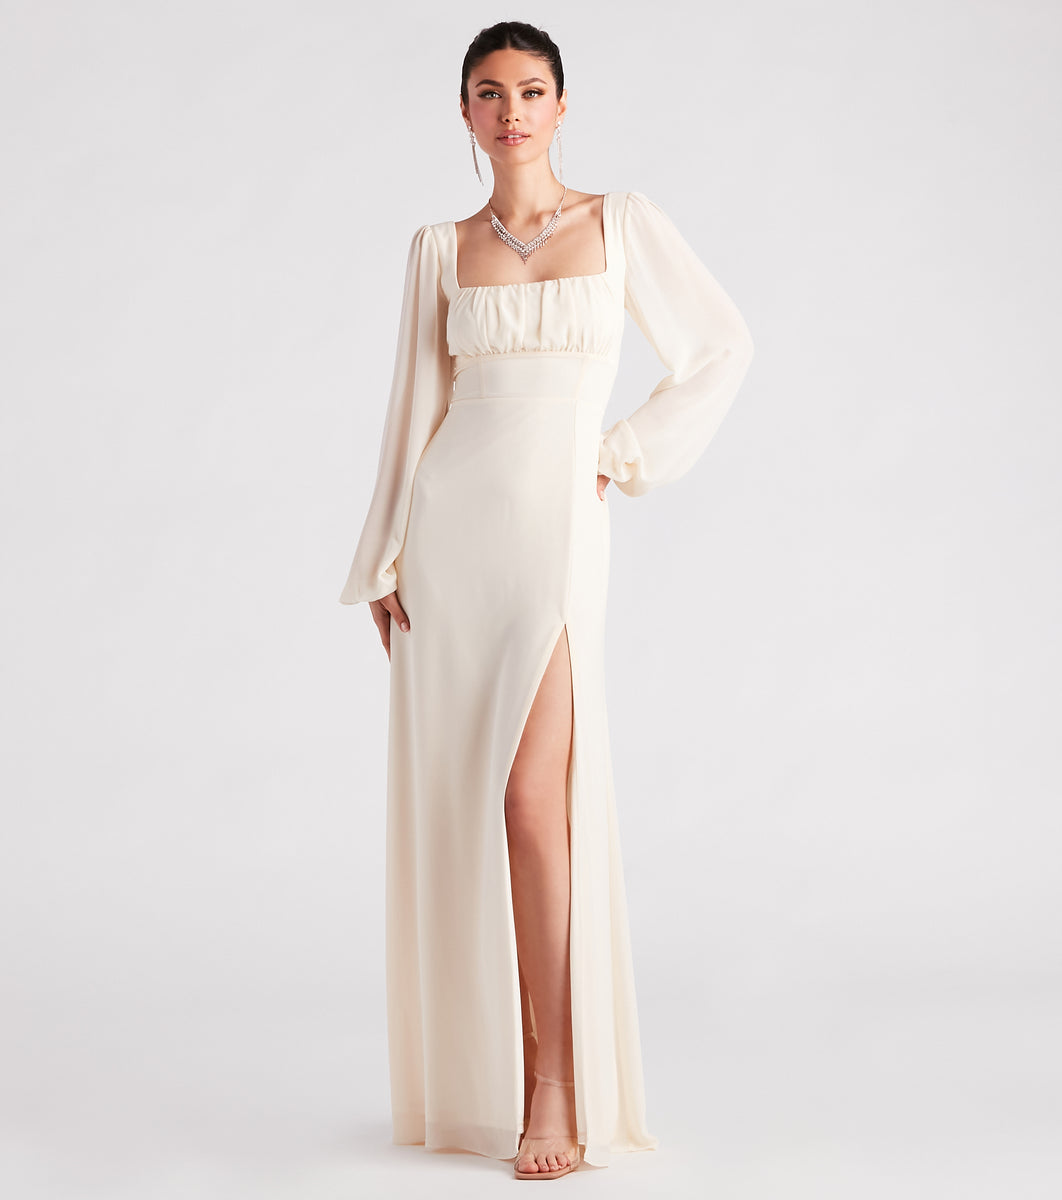 Kaylee Formal Chiffon Lace-Up Long Dress & Windsor